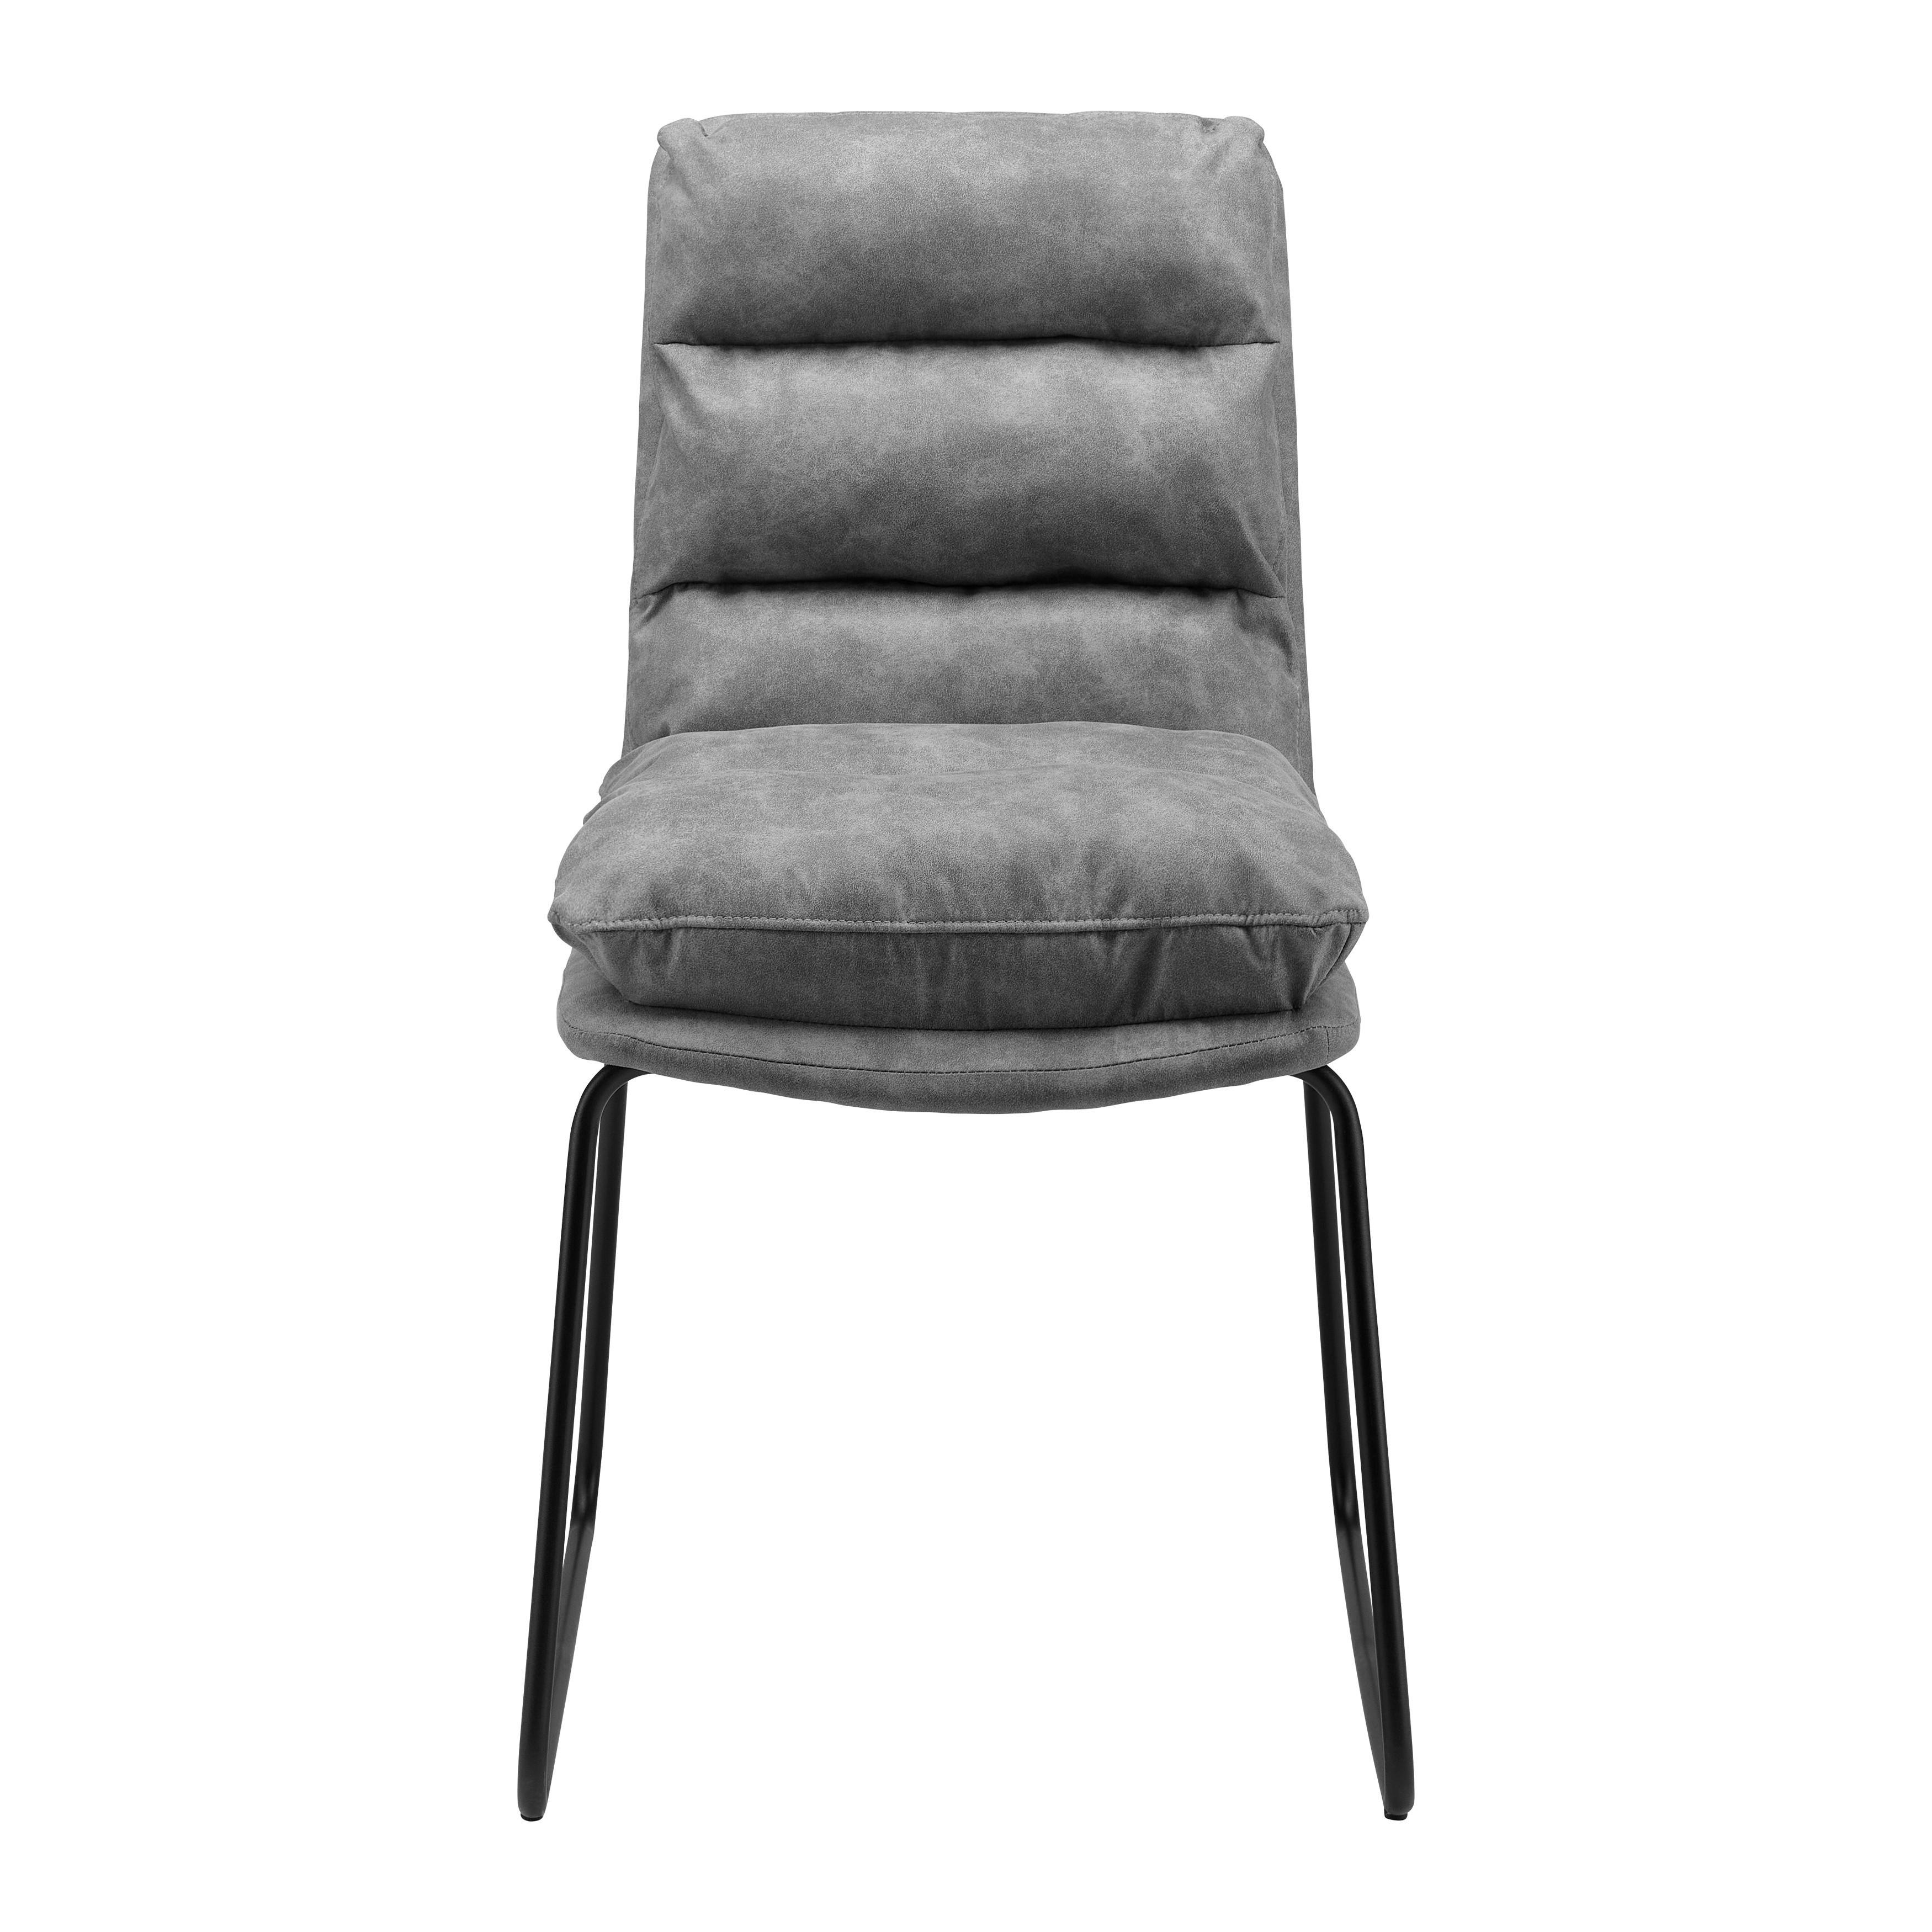 Stuhl "Kona", grau, Gepolstert - Schwarz/Grau, MODERN, Textil/Metall (48/90/65cm) - Bessagi Home